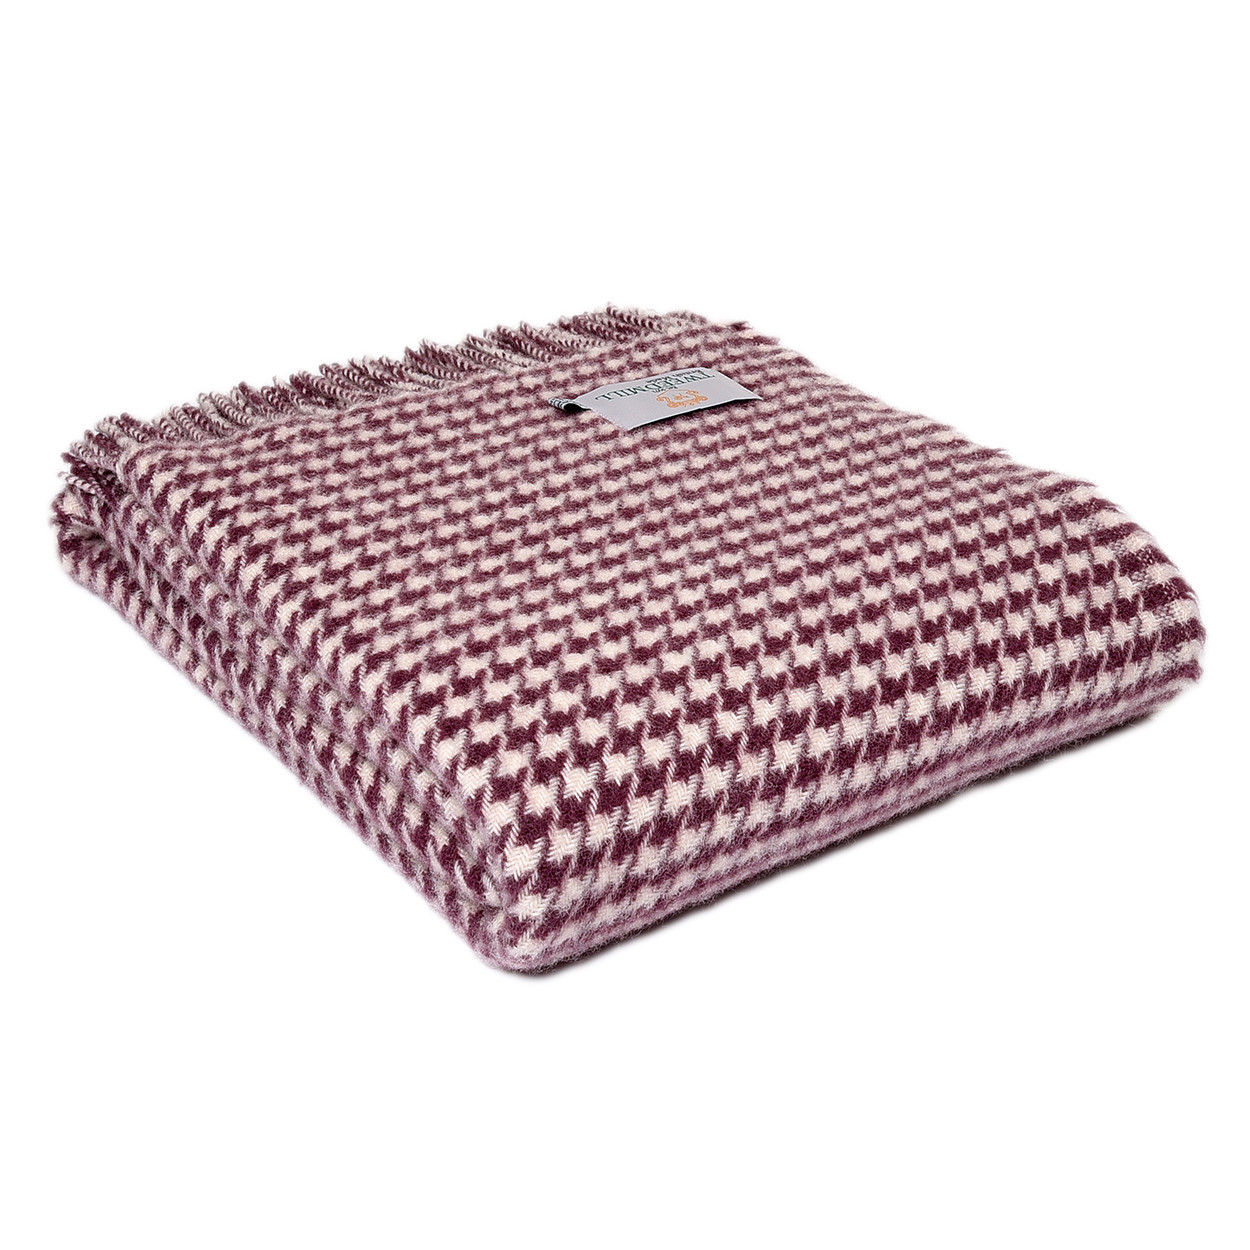 Tweedmill Houndstooth Pure New Wool Blanket - Cream & Grape 